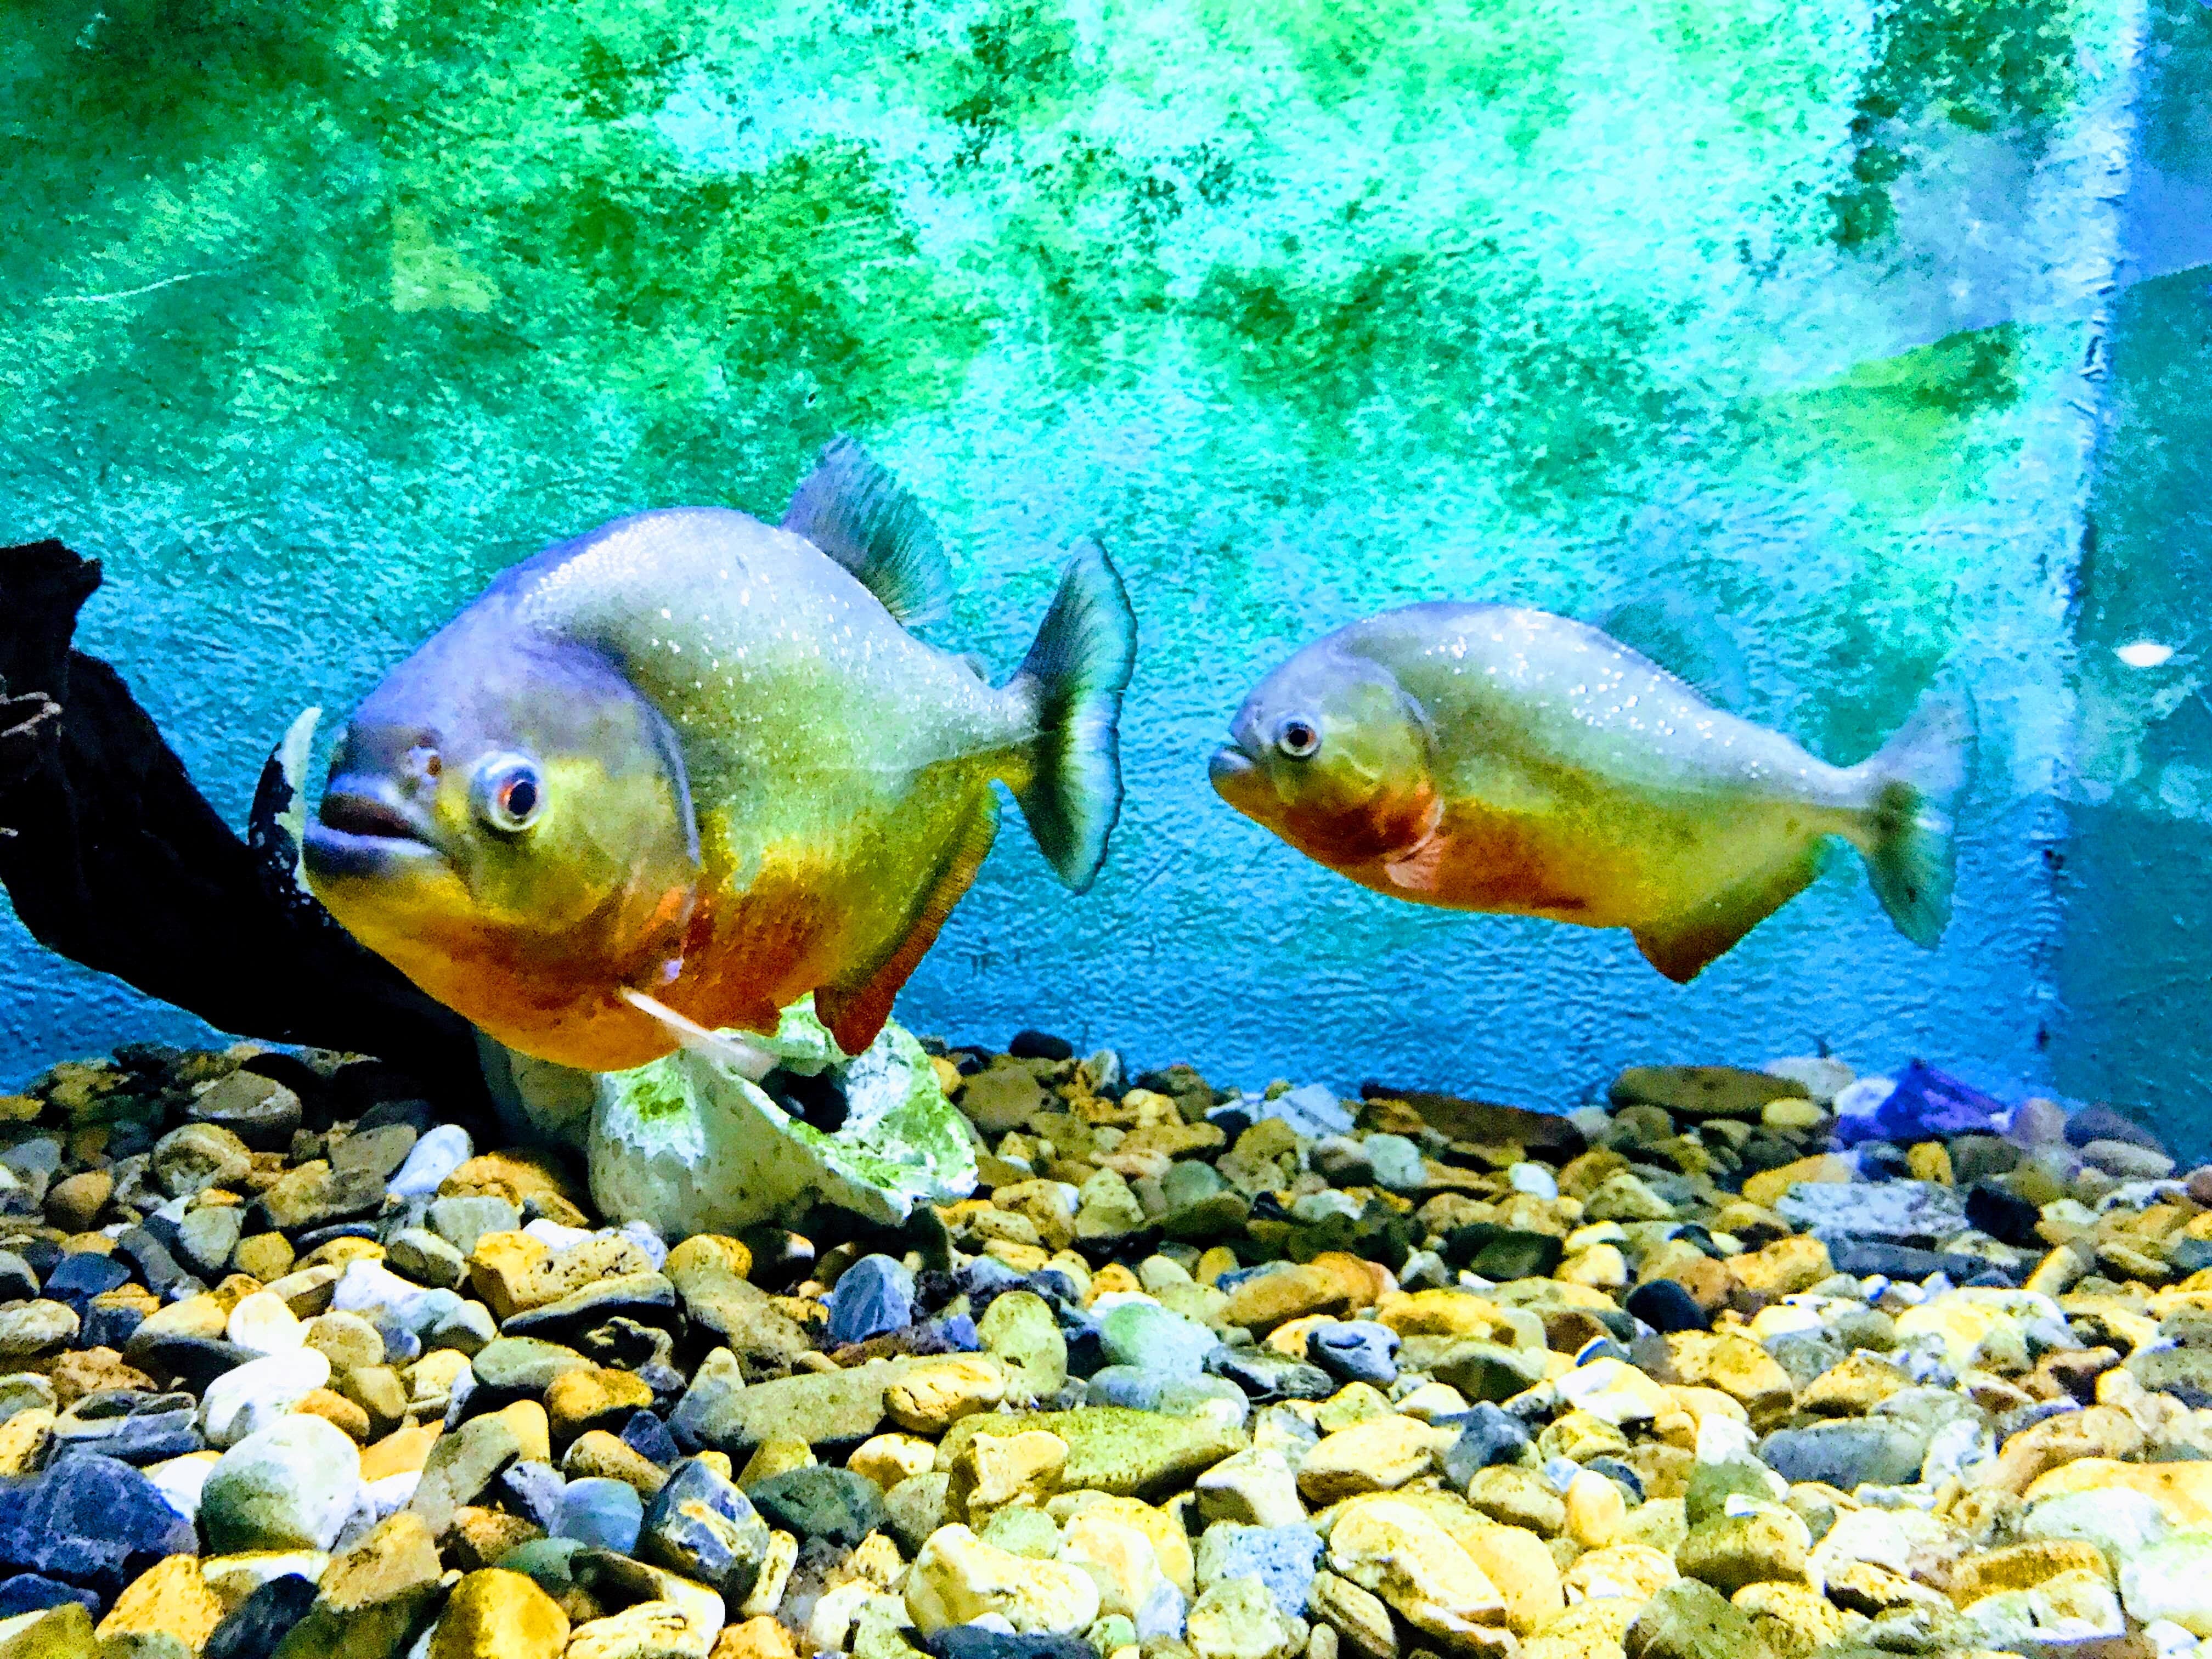 Pretty picture of two fish